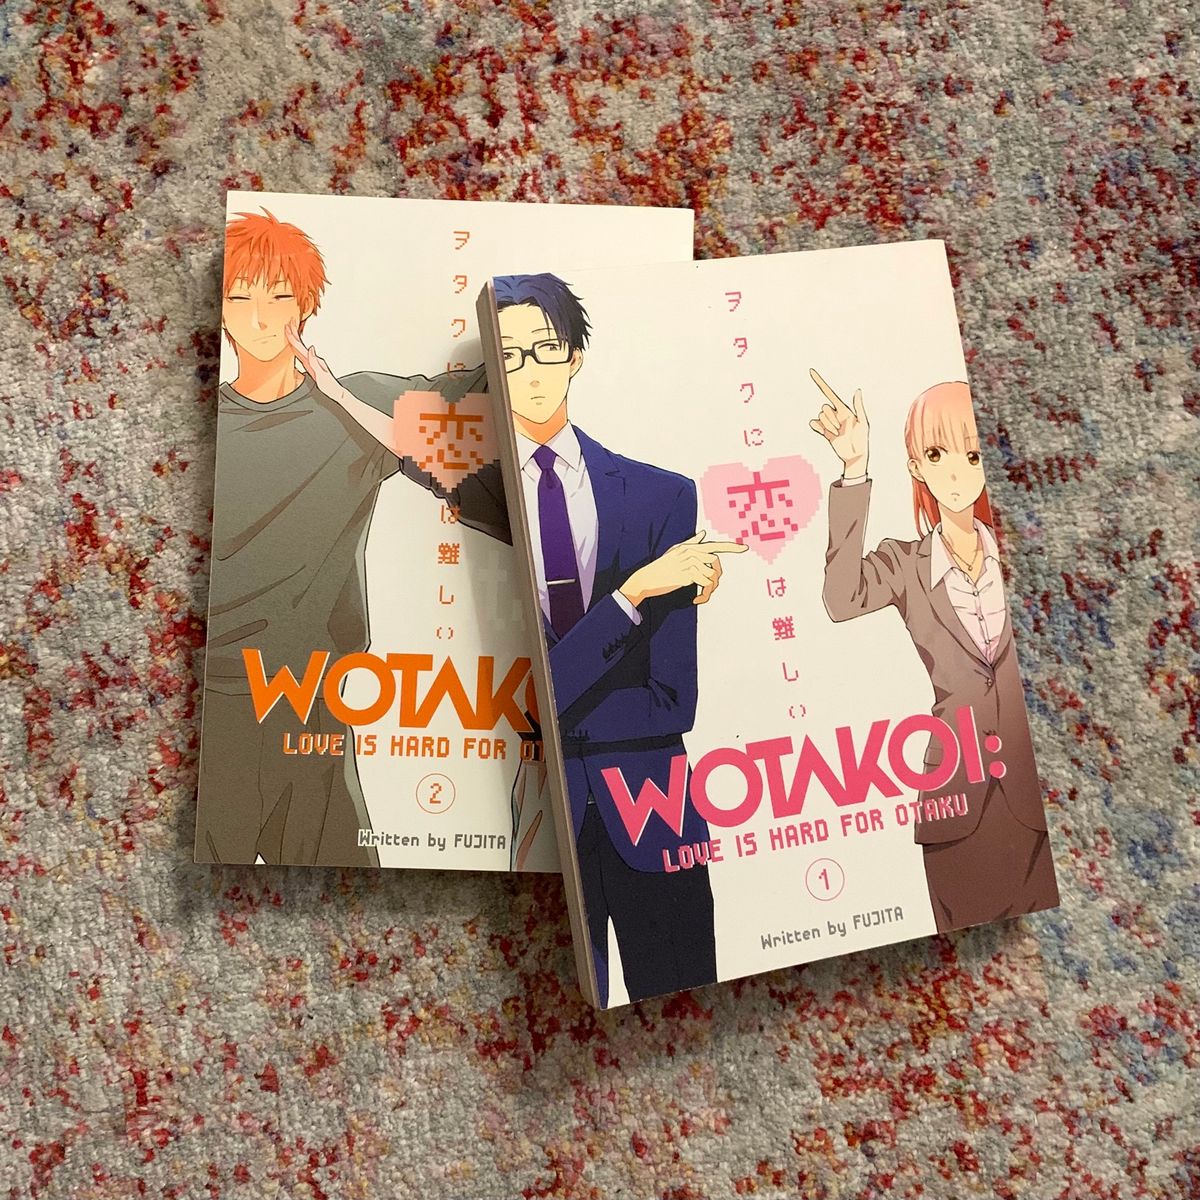 Wotakoi Love Is Hard for Otaku Manga Volume 2